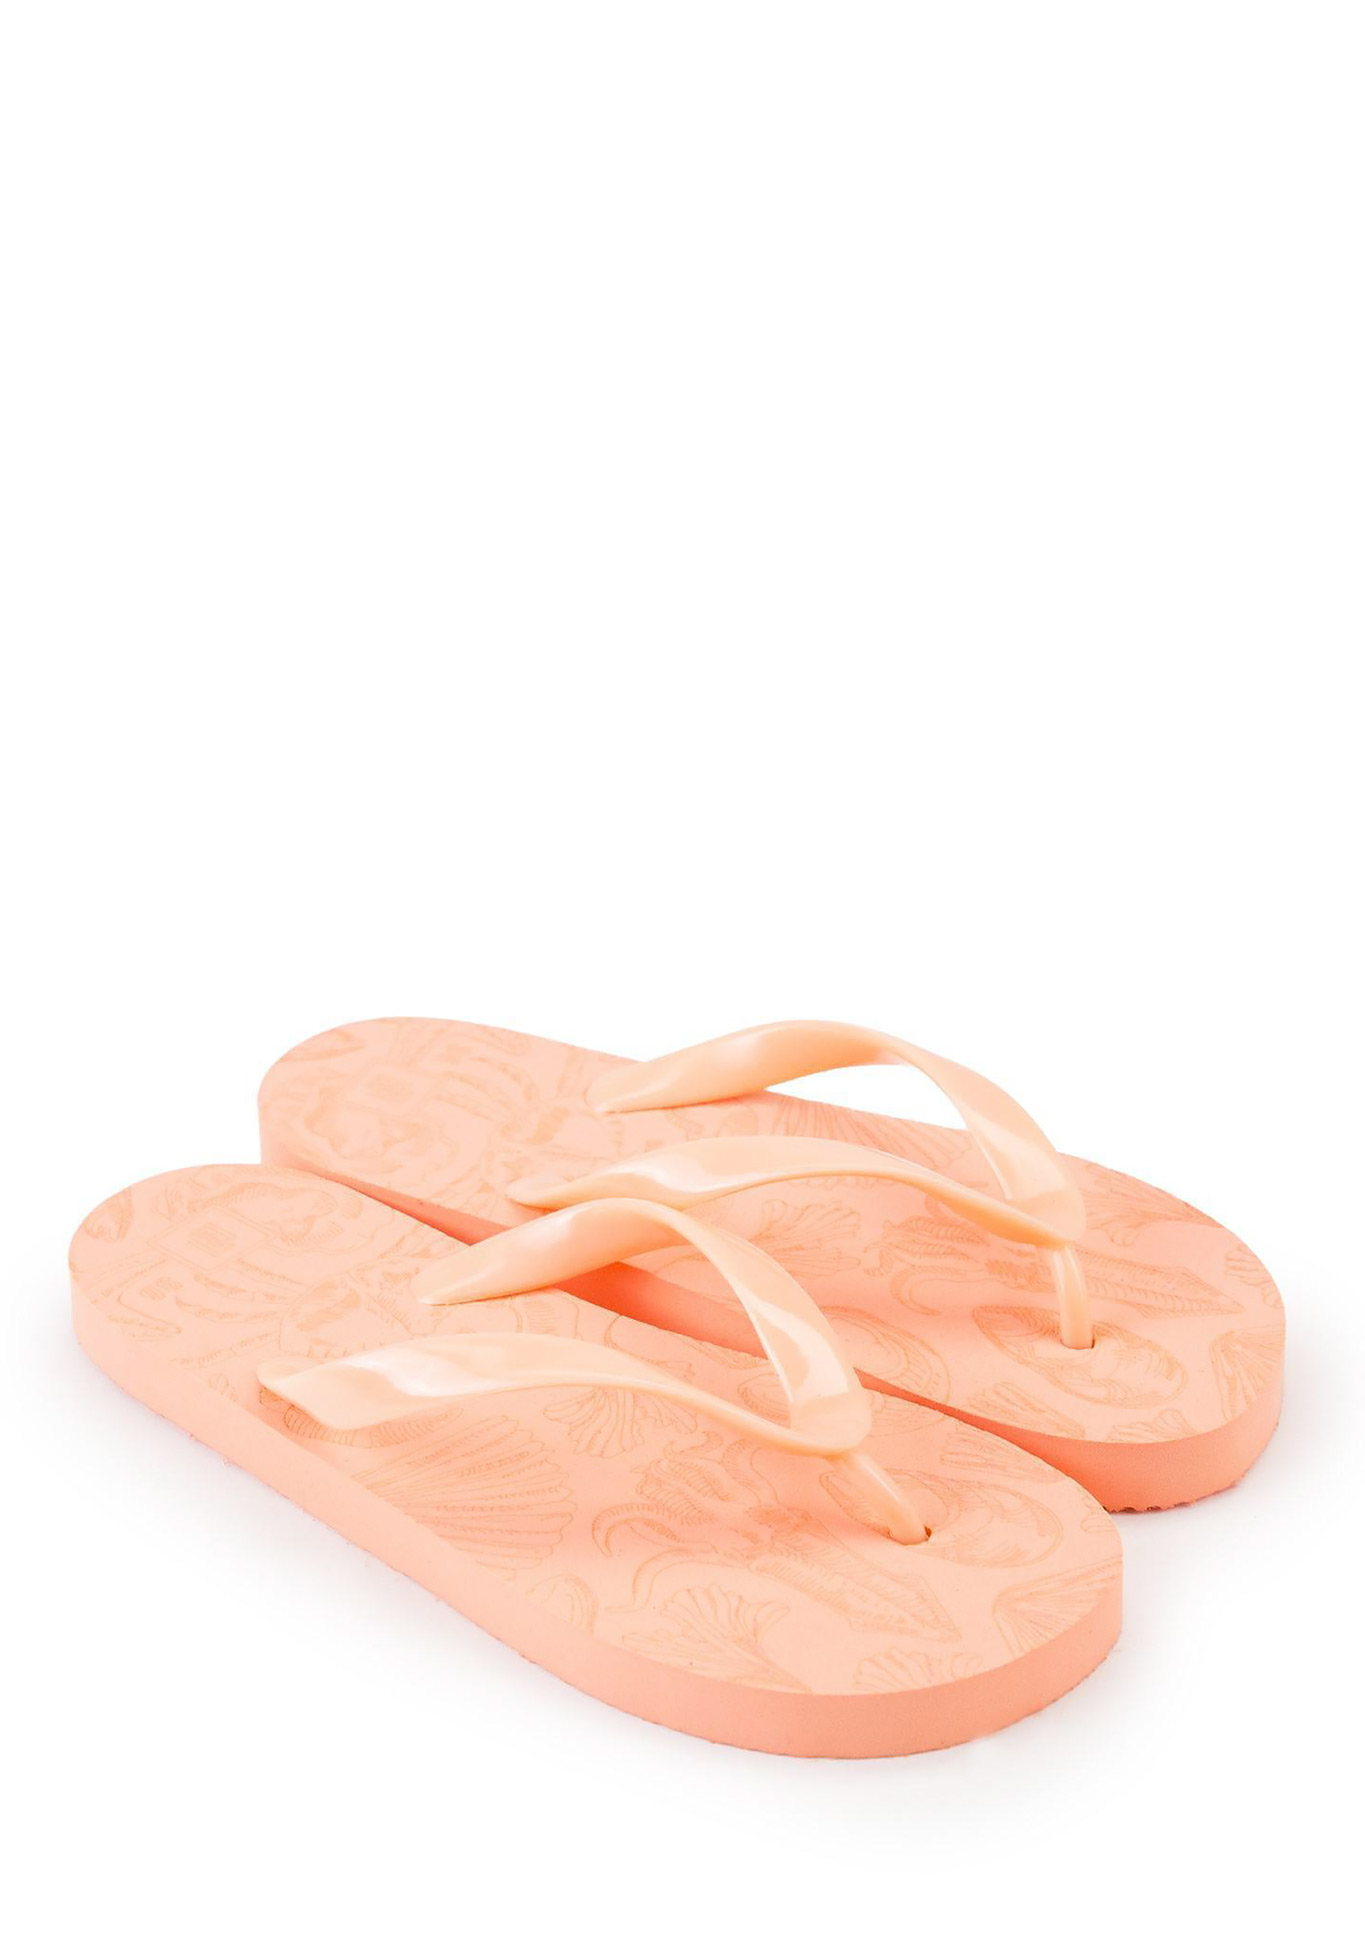 MARINE Сланцы женские Ocean SW-O-Pch, размер 37, цвет персиковый